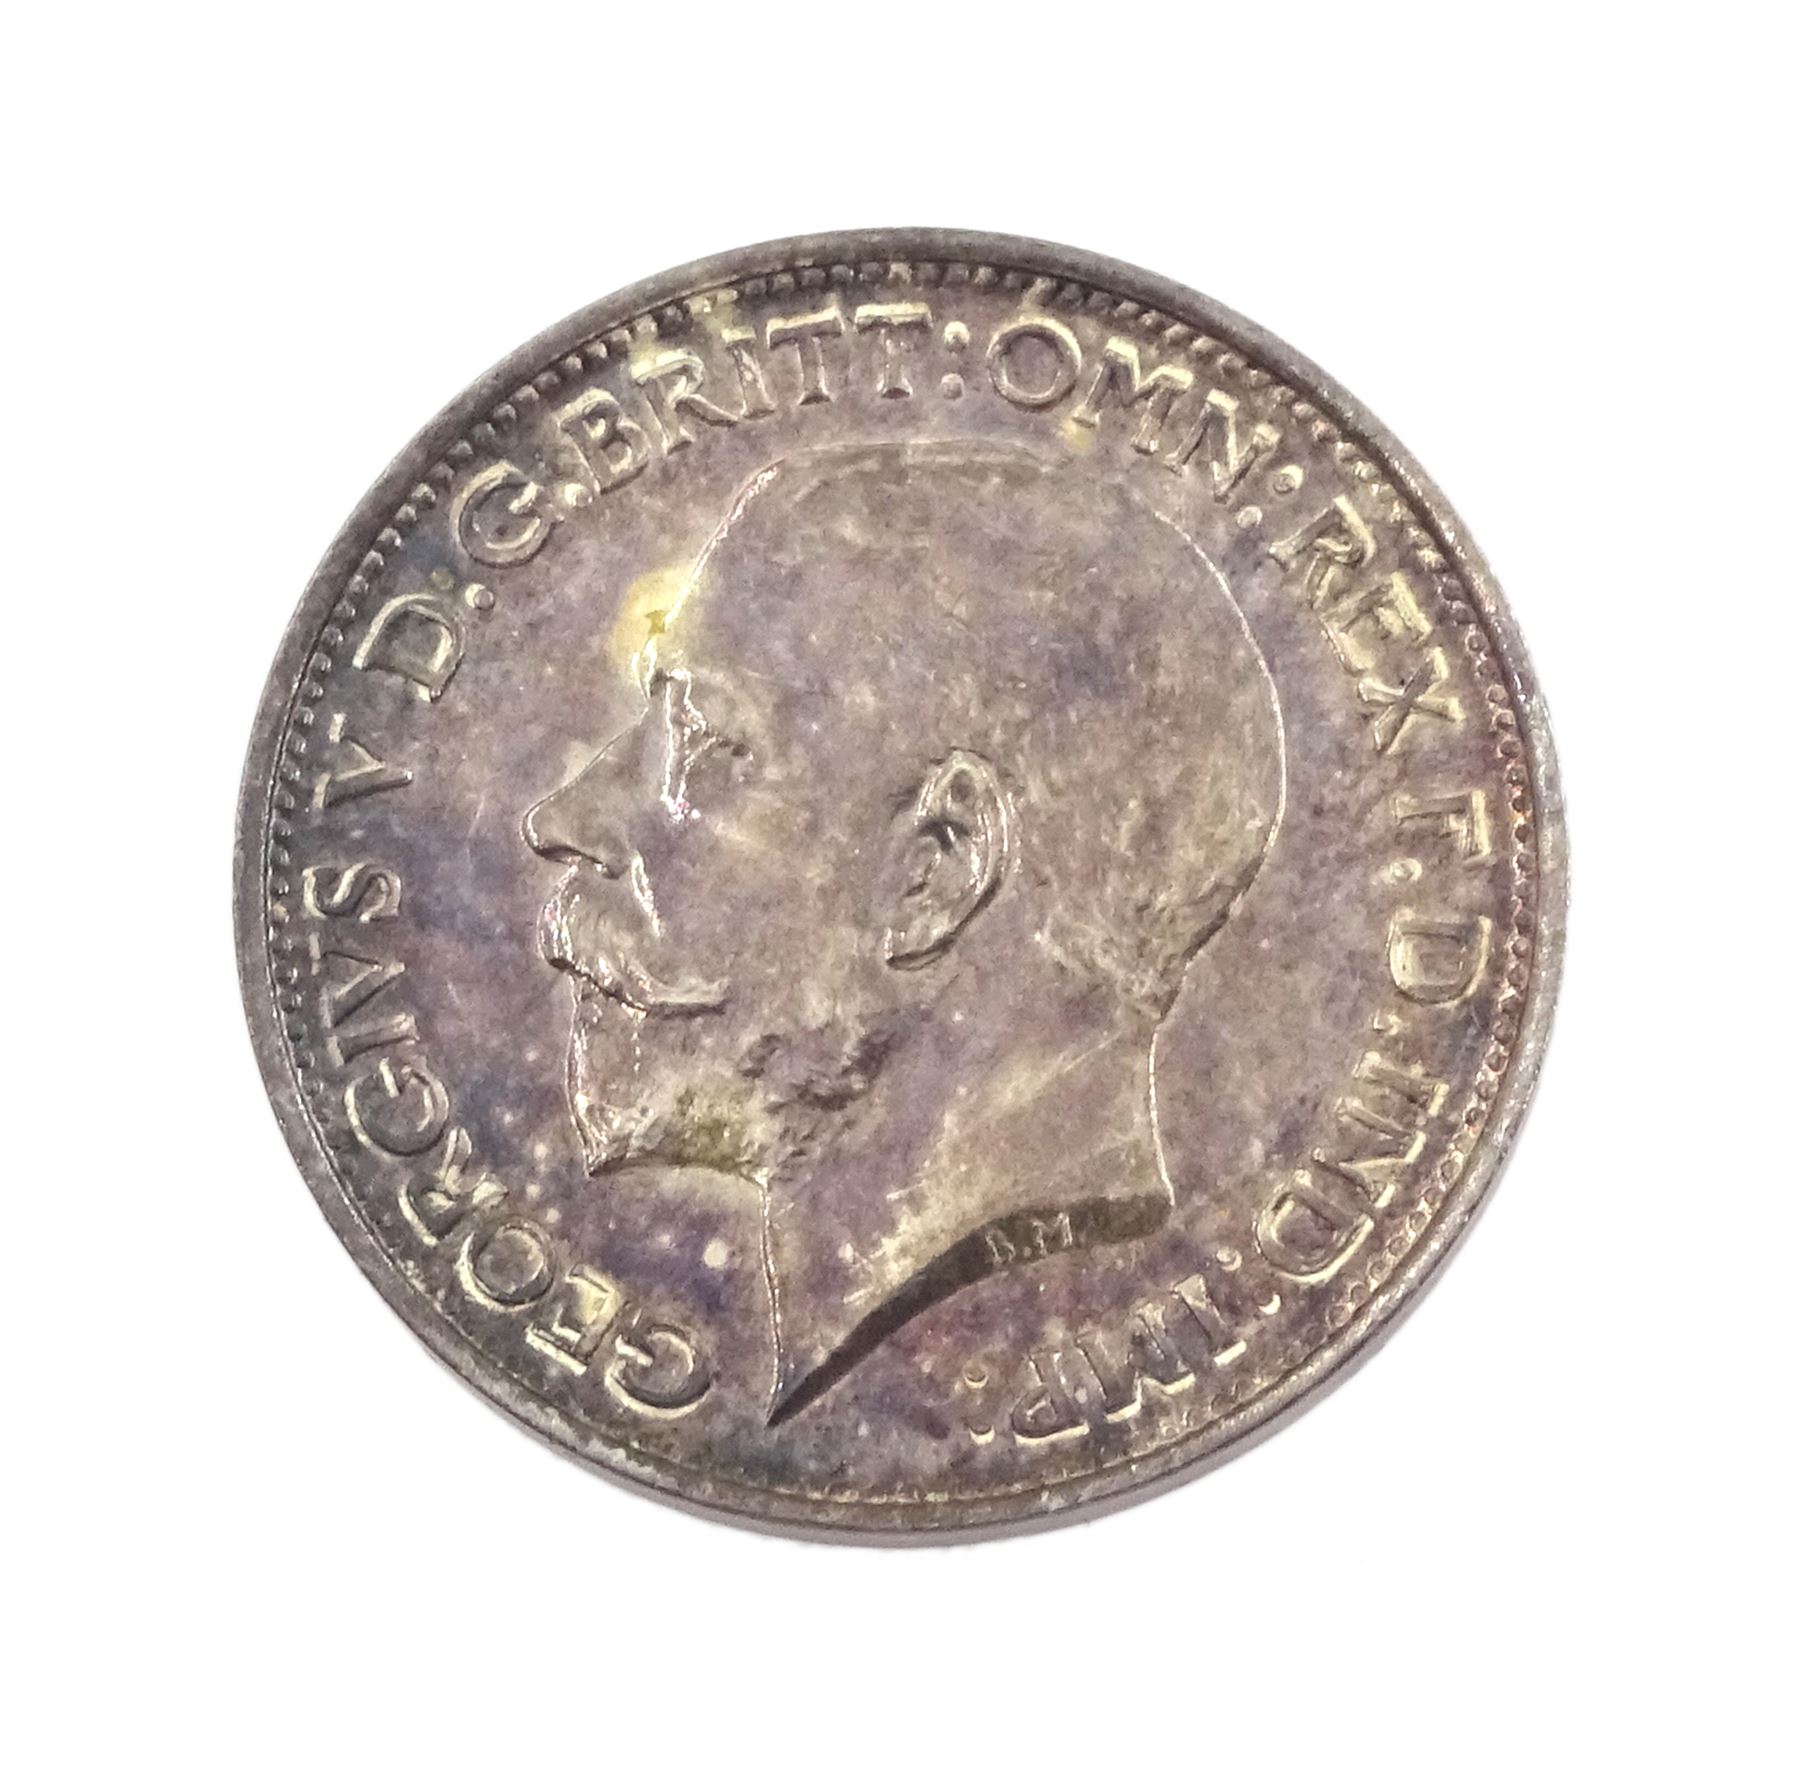 King George V 1911 proof long coin set - Image 20 of 28